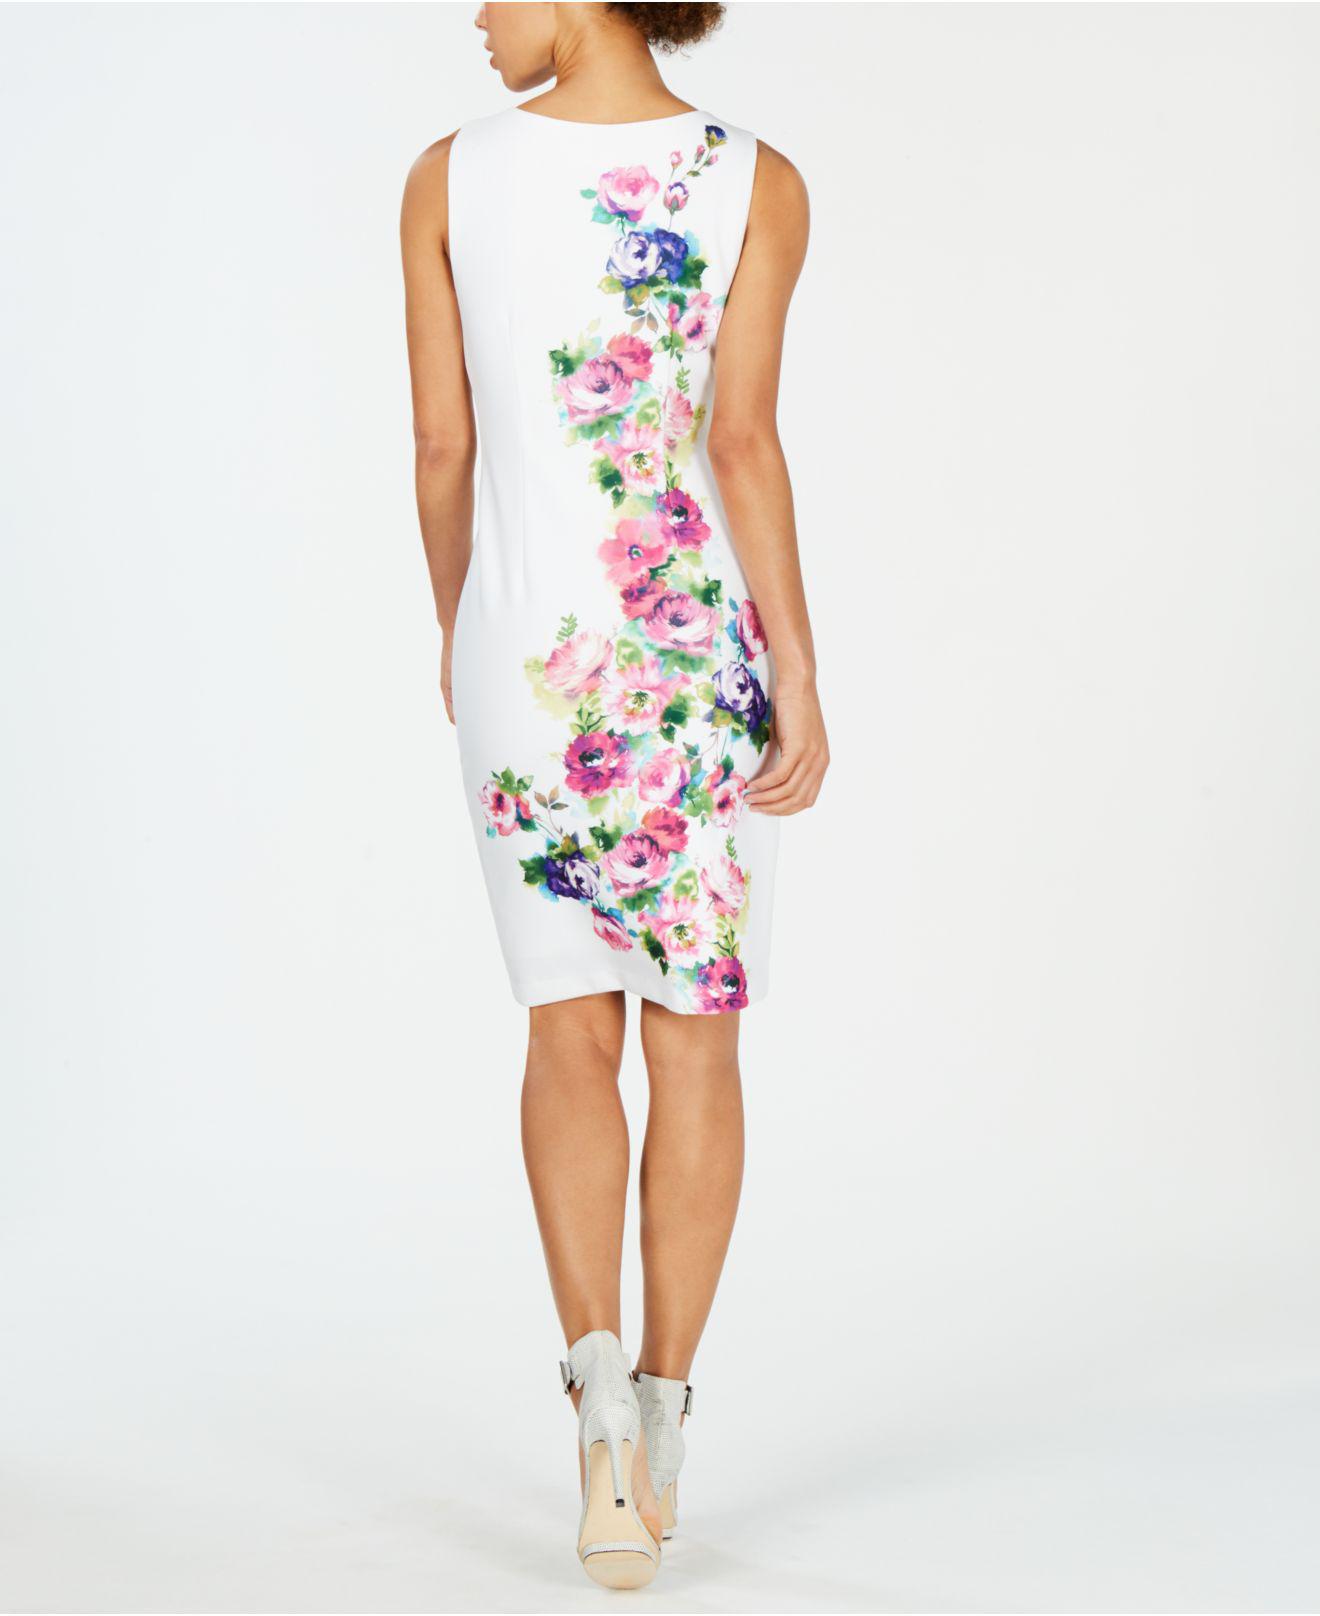 Buy > calvin klein gray floral dress > in stock